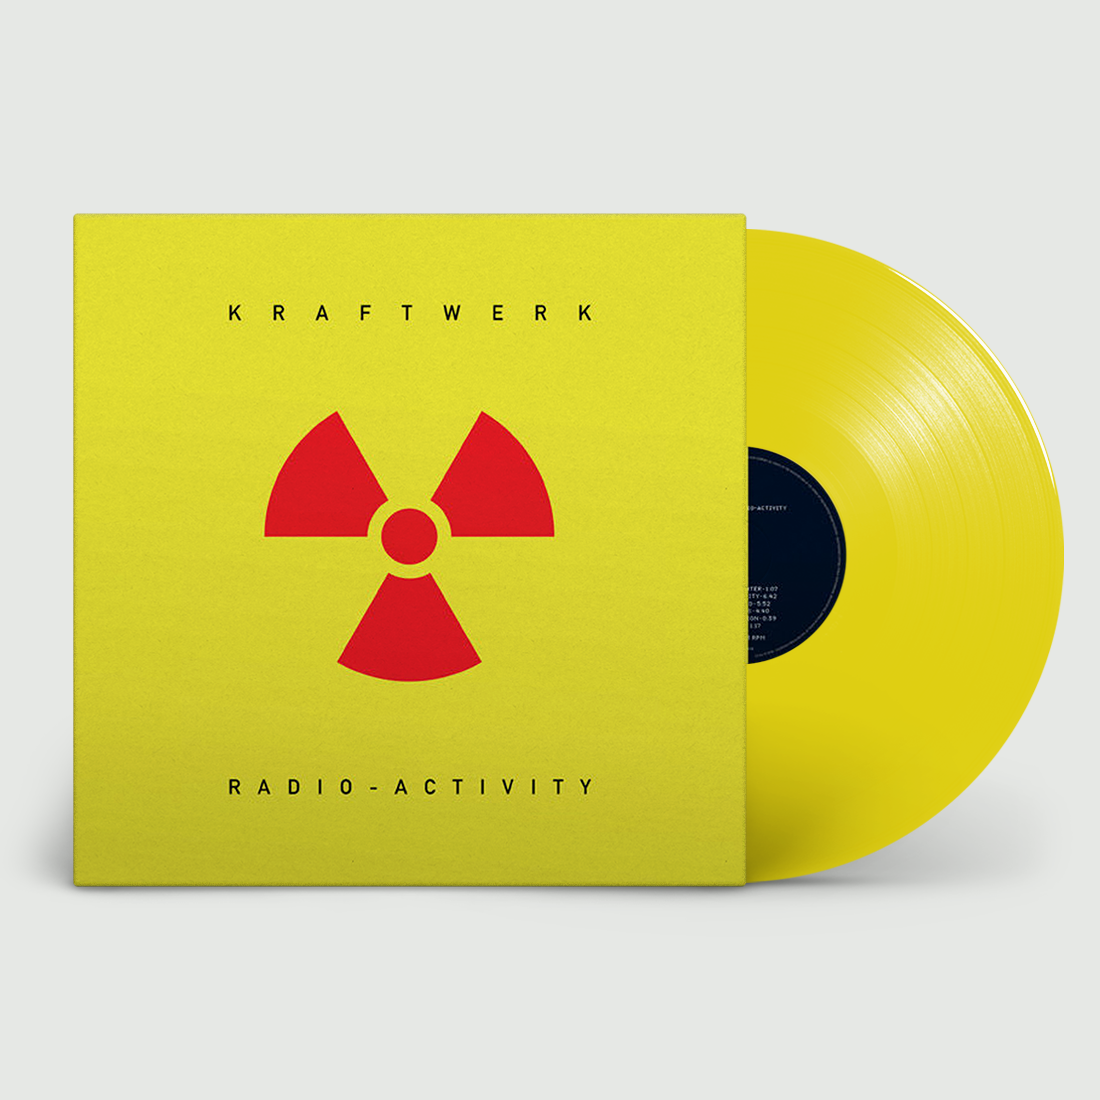 Kraftwerk - Radio-Activity: Limited Edition Translucent Yellow Vinyl LP